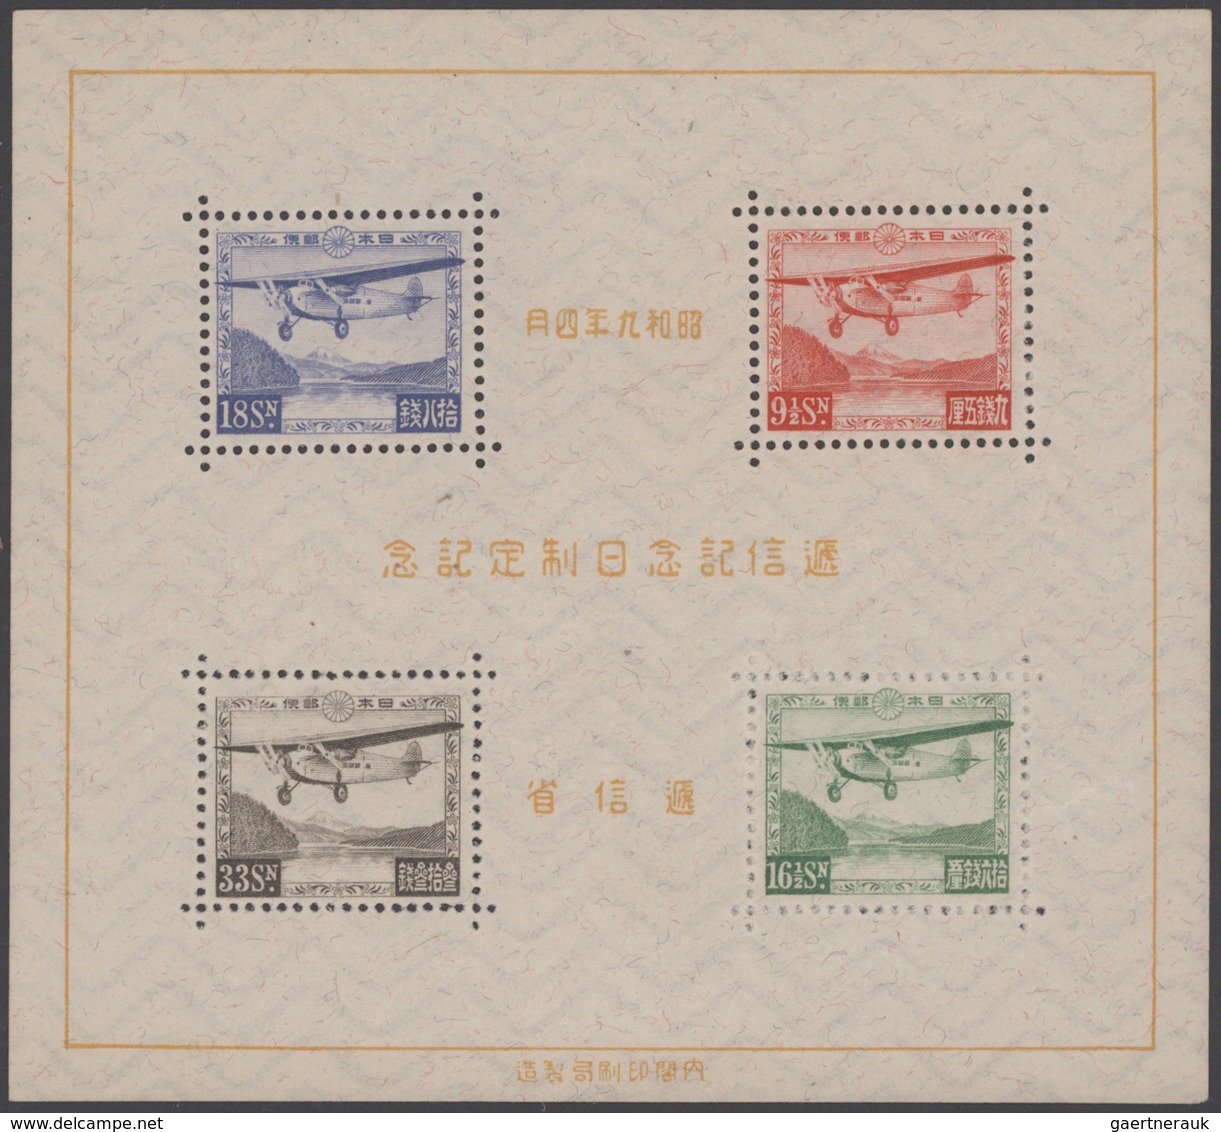 Asien: 1900/1970 (ca.), Balance On Stockcards, Incl. Some PRC, Japan 1934 Airmail Souvenir Sheet Min - Sonstige - Asien